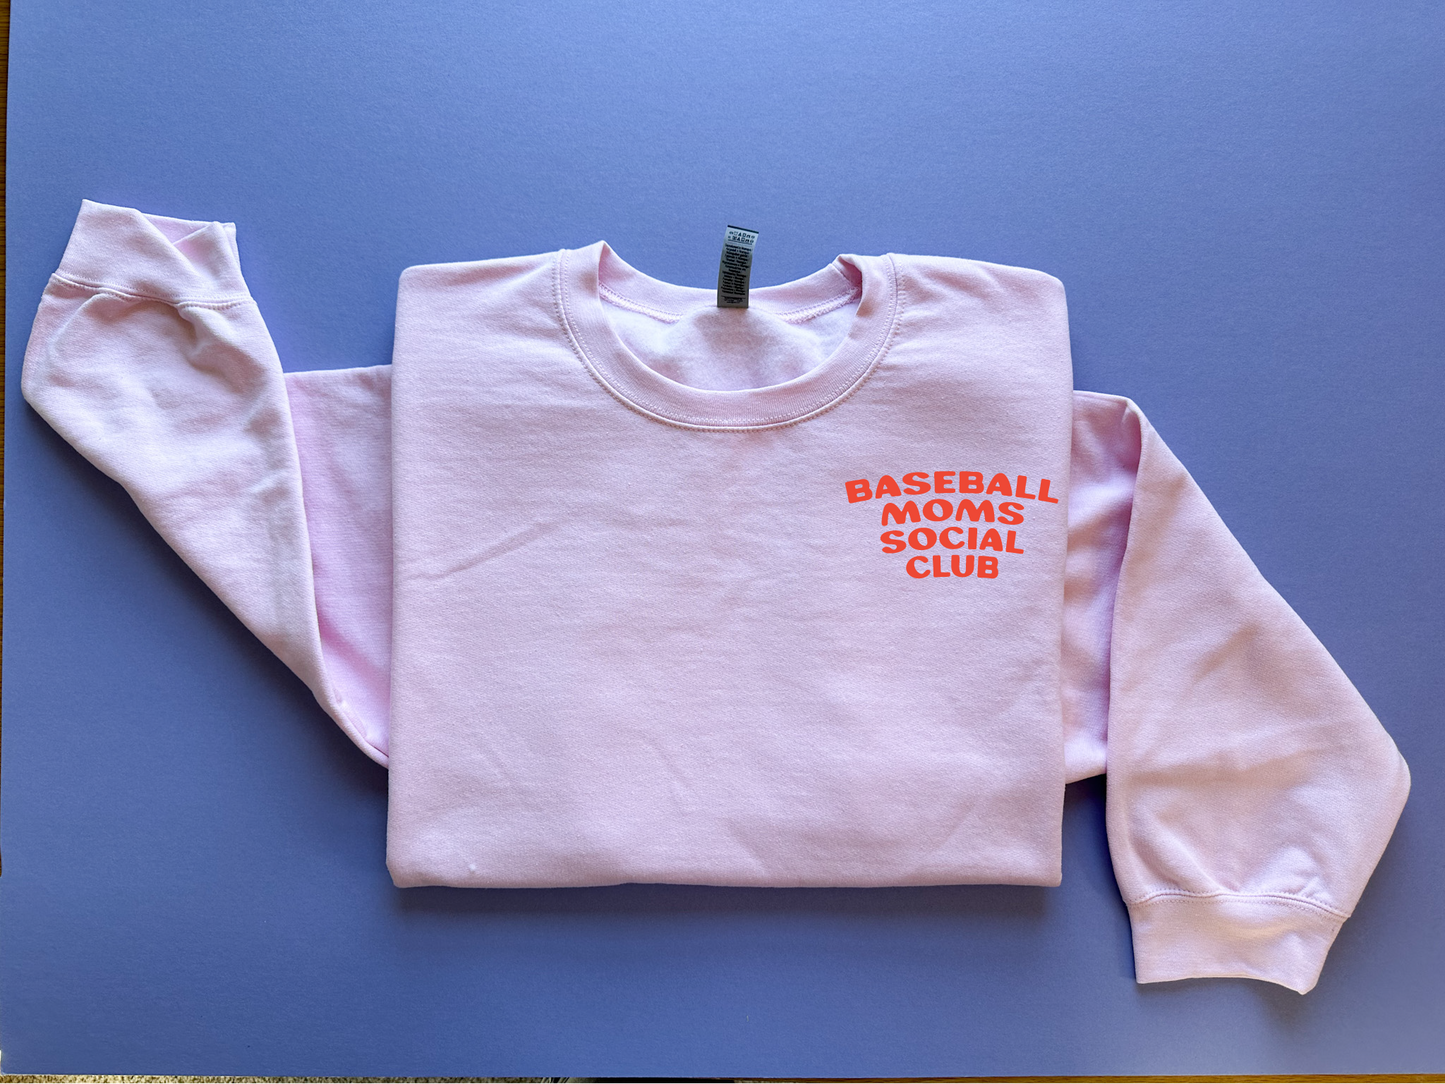 Baseball Moms Sweatshirt in Pink - Adult